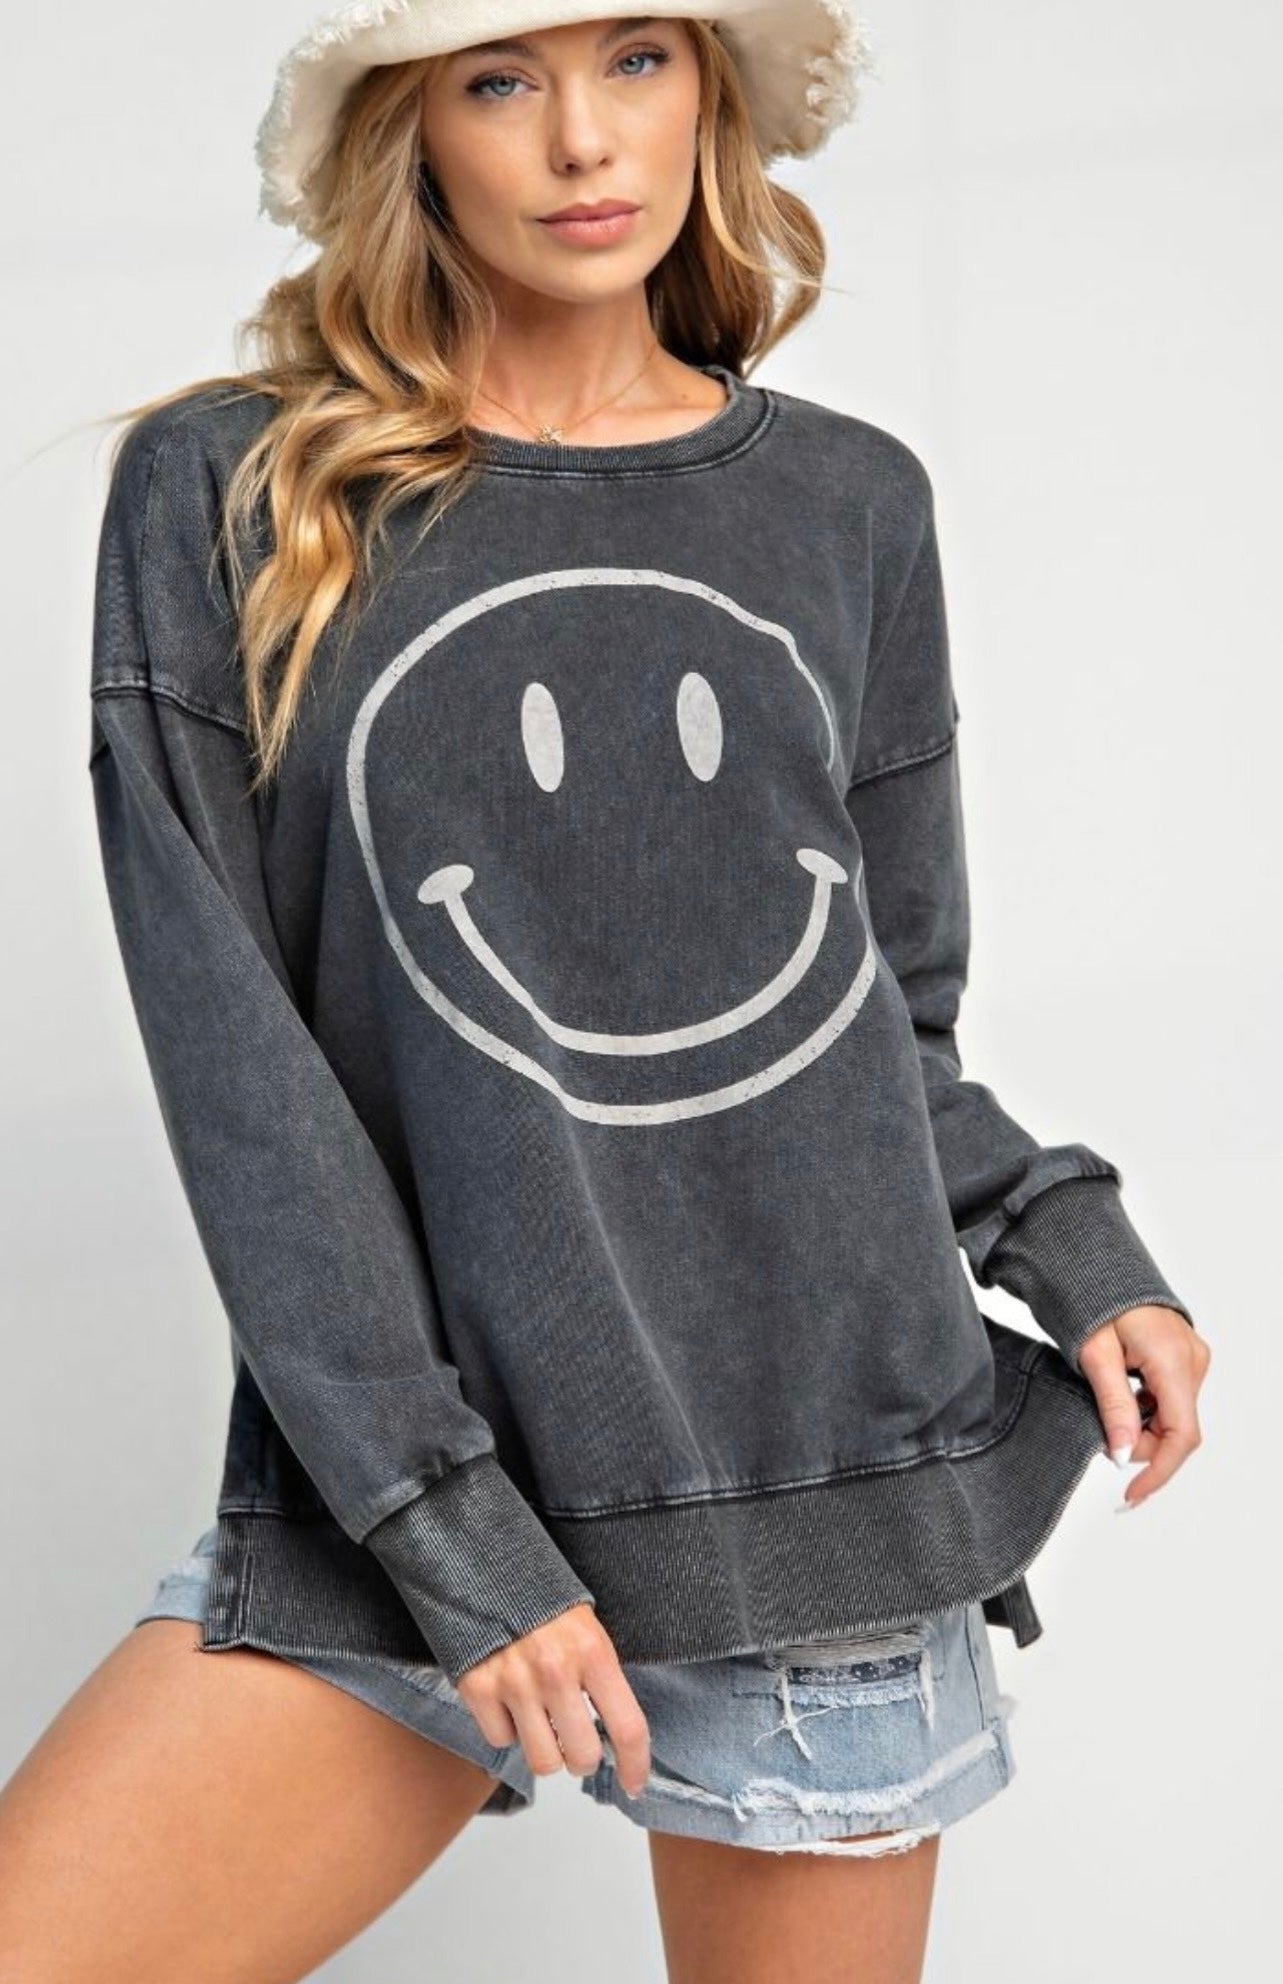 Easel smiley face sweatshirt